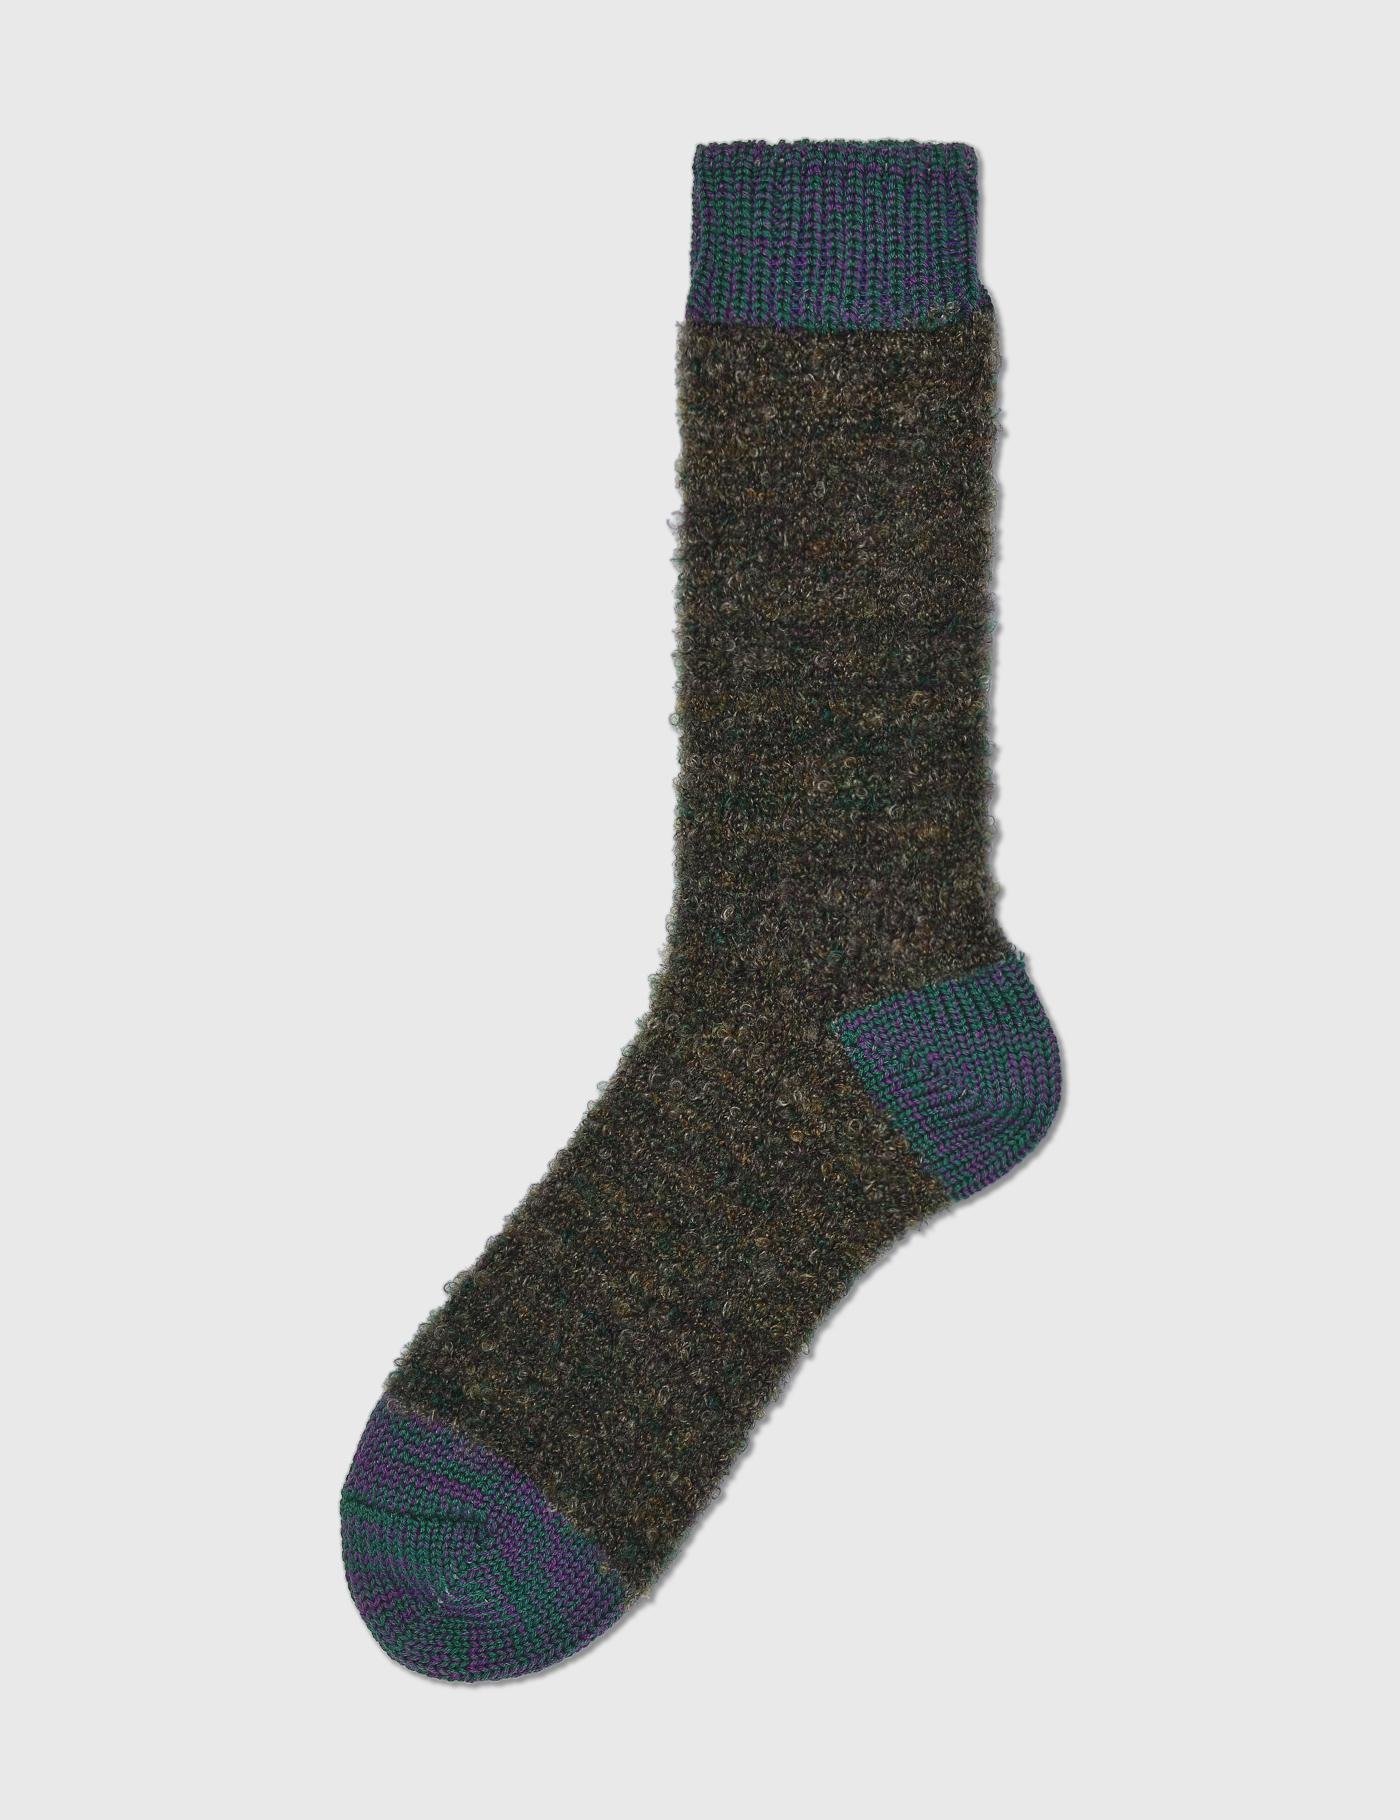 Mohair Wool Socks by DECKA SOCKS